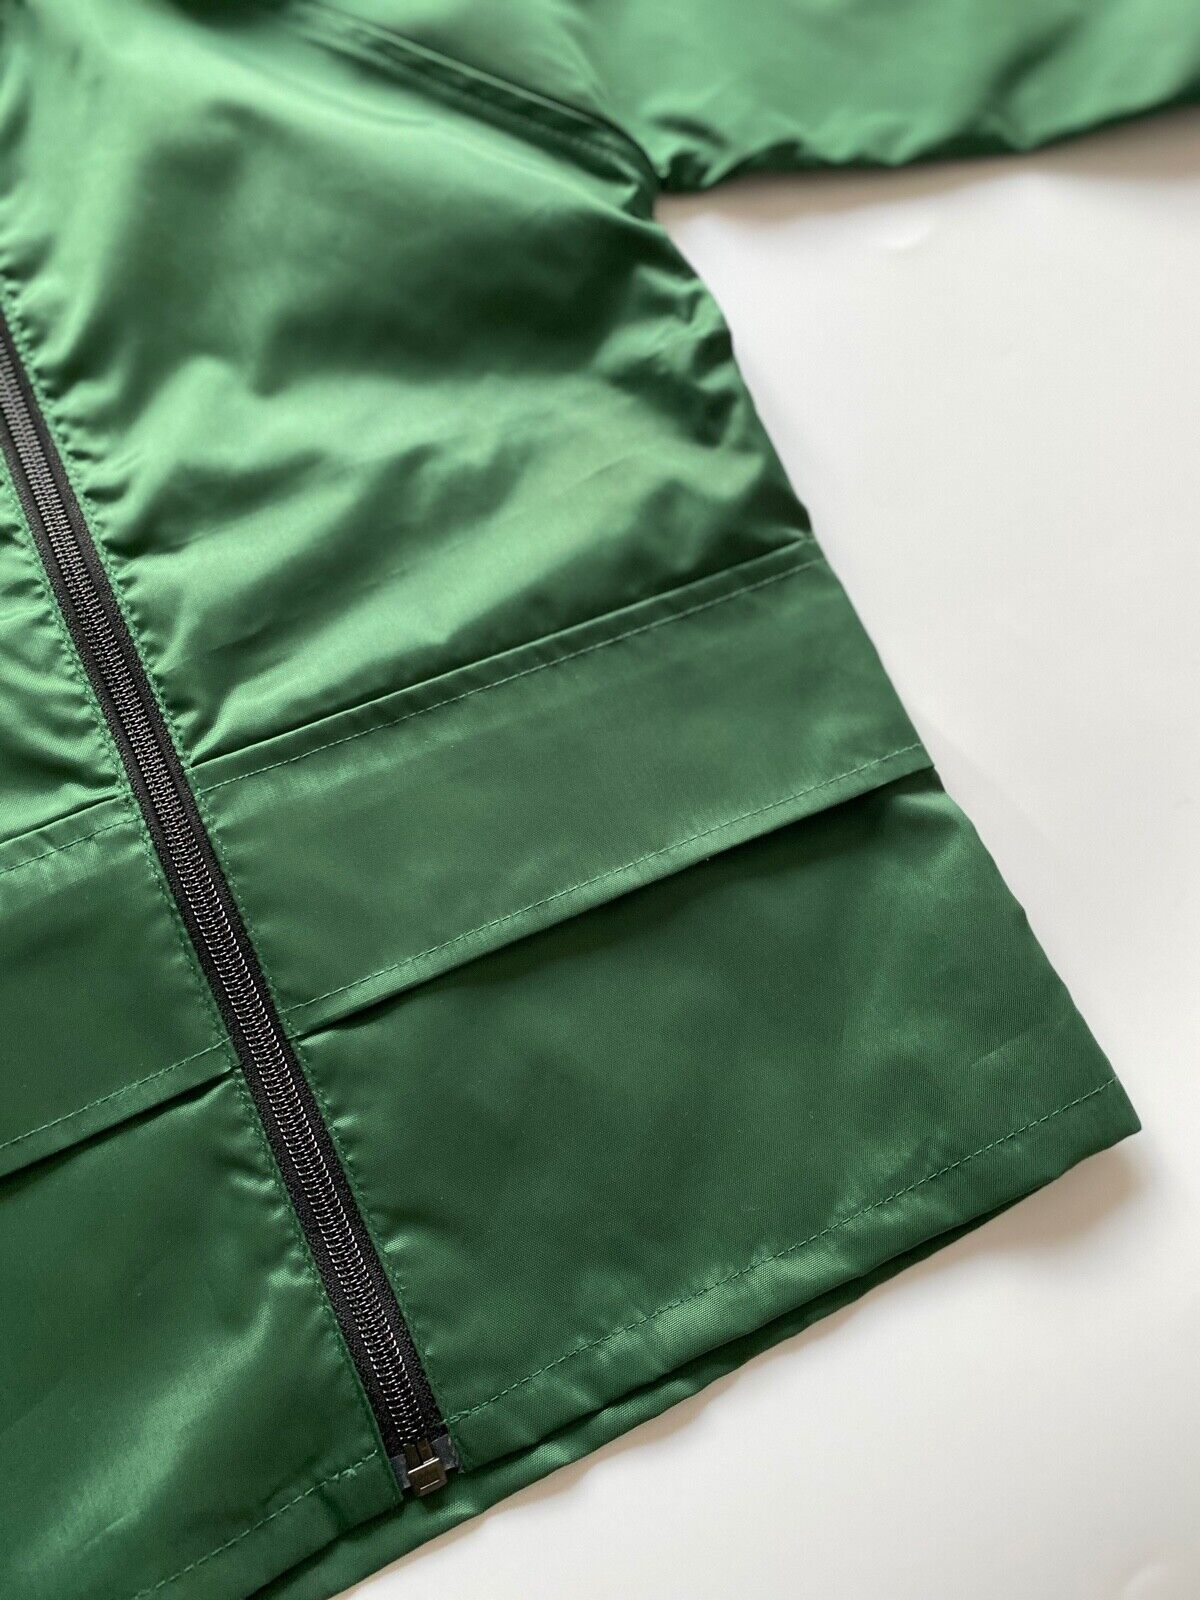 Kids Winterbottom's Green Rain Pack-away Coat Size 22"